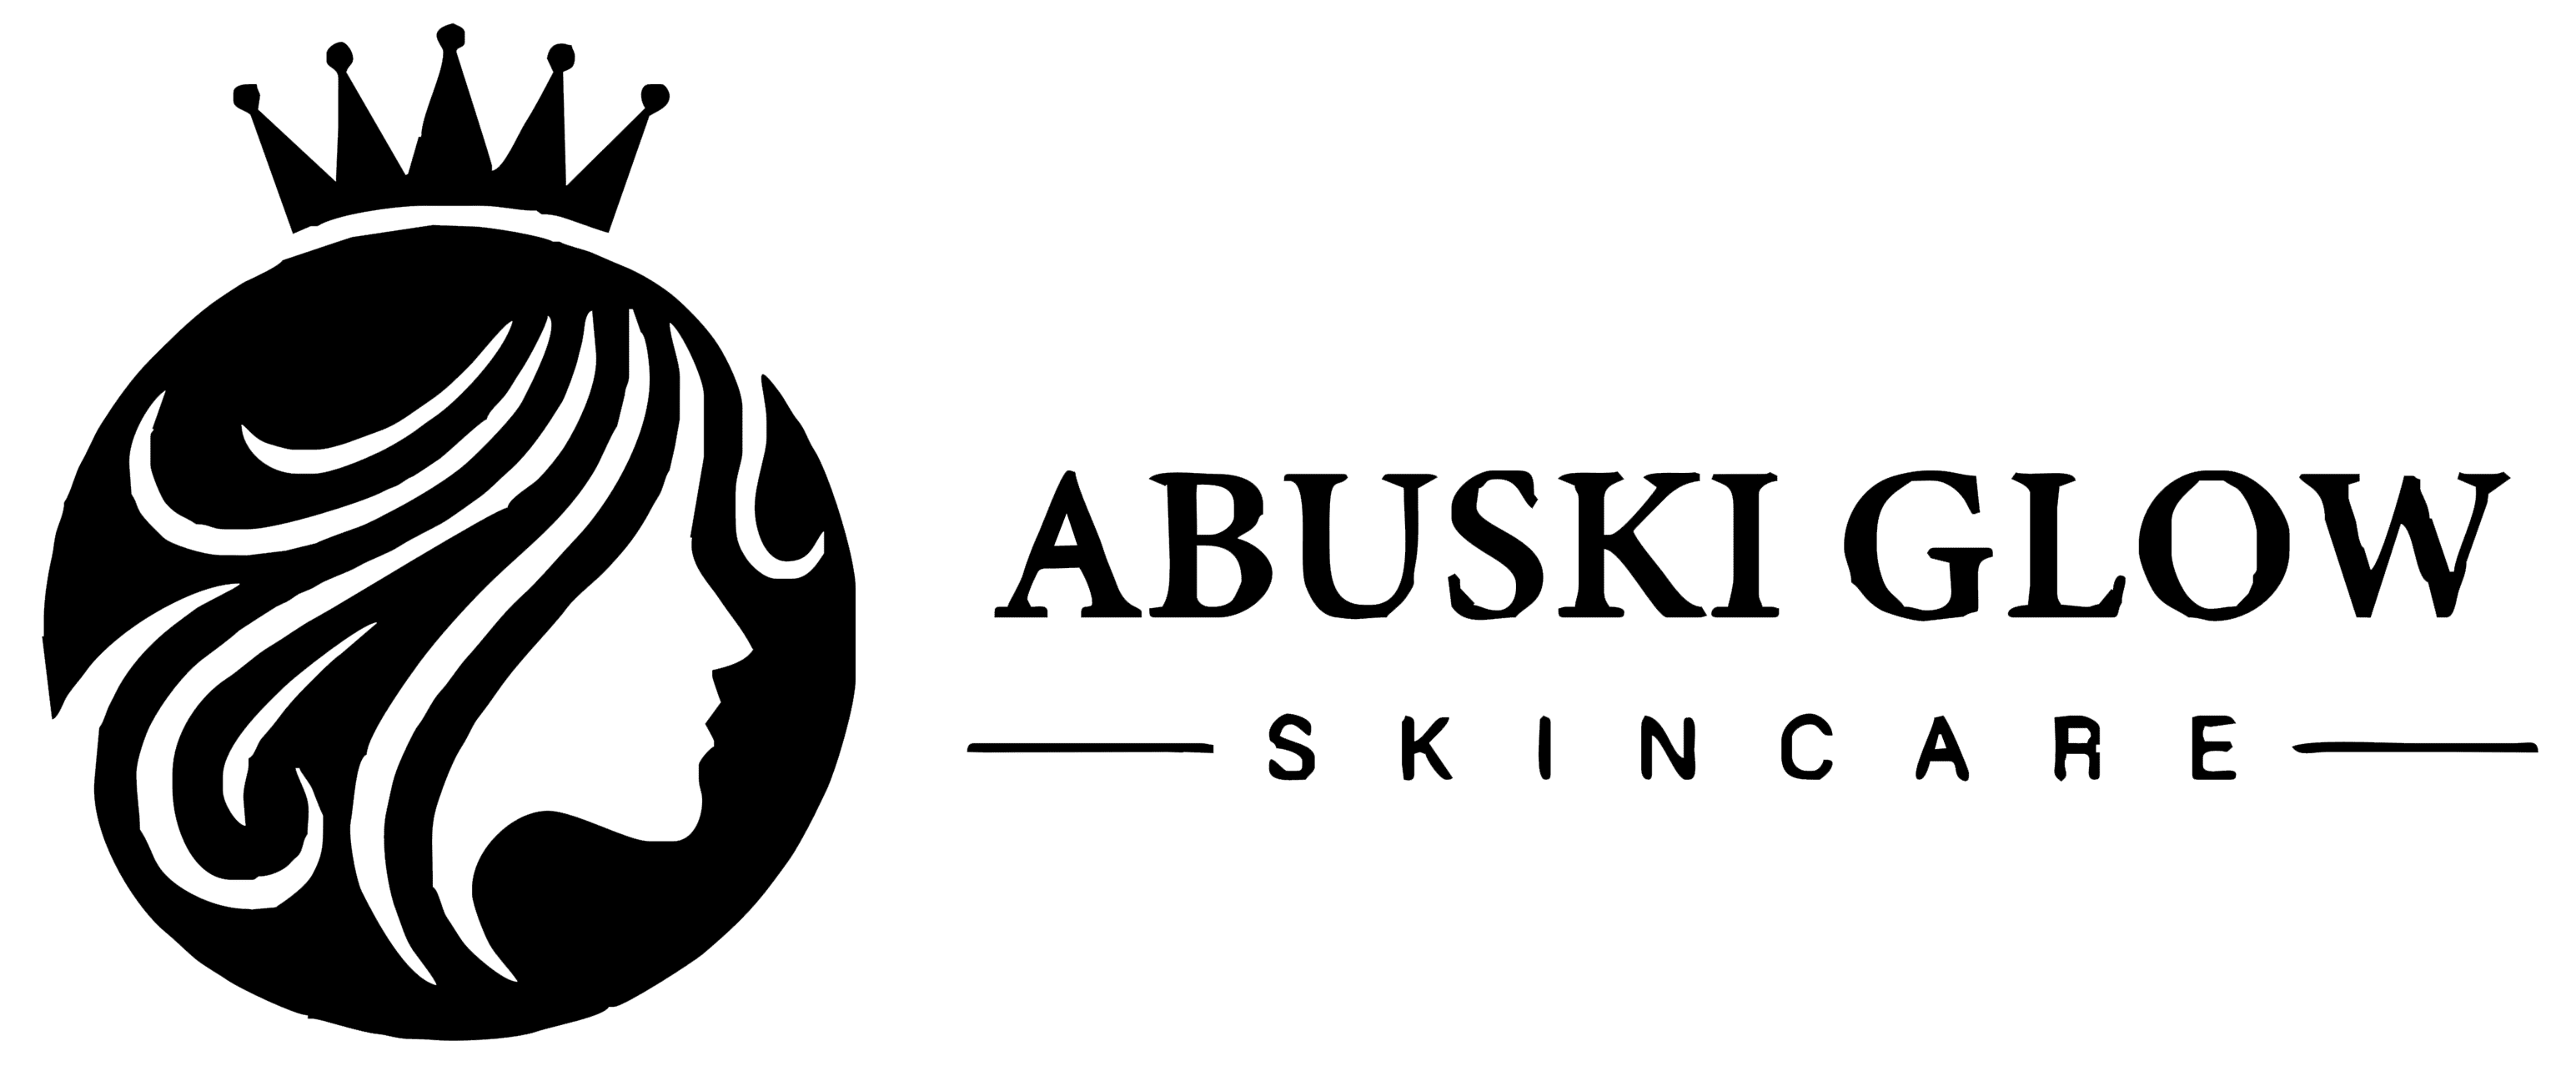 Abuskiglow Skincare